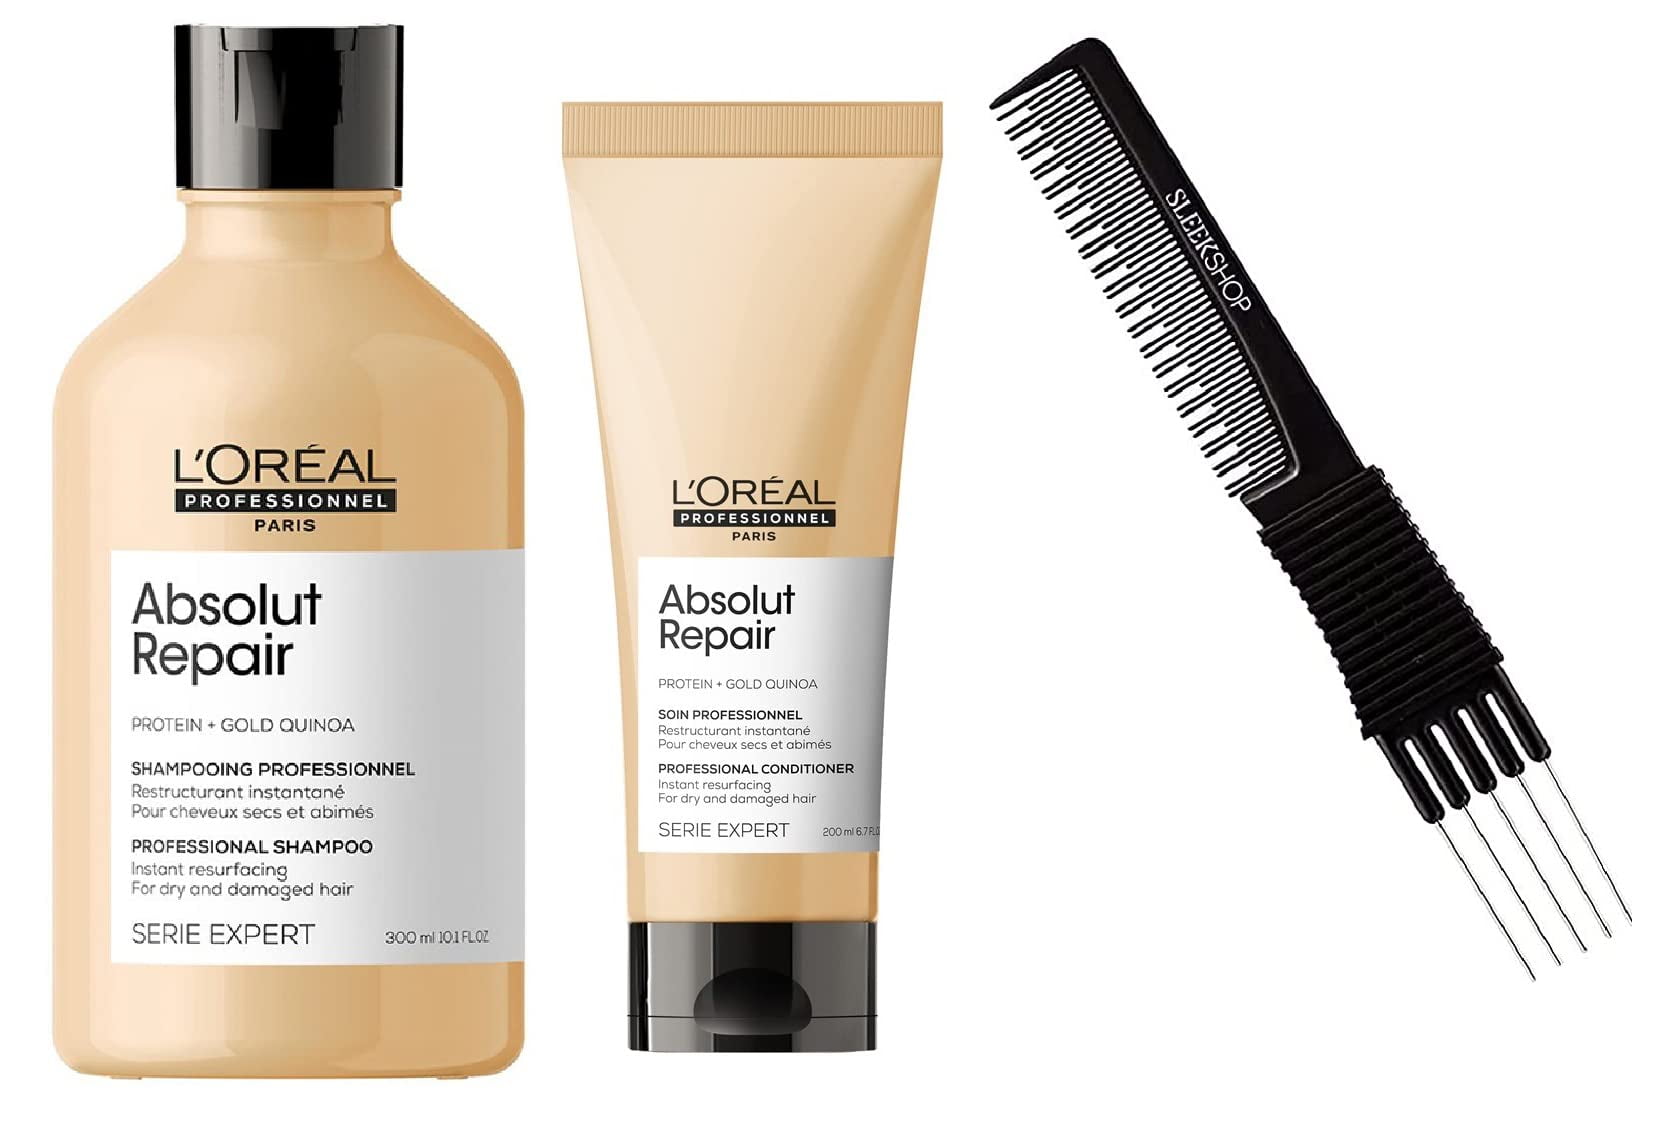 frisør affældige etc L'oreal SERIE EXPERT Absolut Repair Shampoo & Conditioner DUO Set, Absolute  Instant Resurfacing for Dry & Damaged Hair Kit (w/ Sleek Loreal Teasing  Comb) (ABSOLUT REPAIR - 10.1 oz + 6.7 oz) - Walmart.com